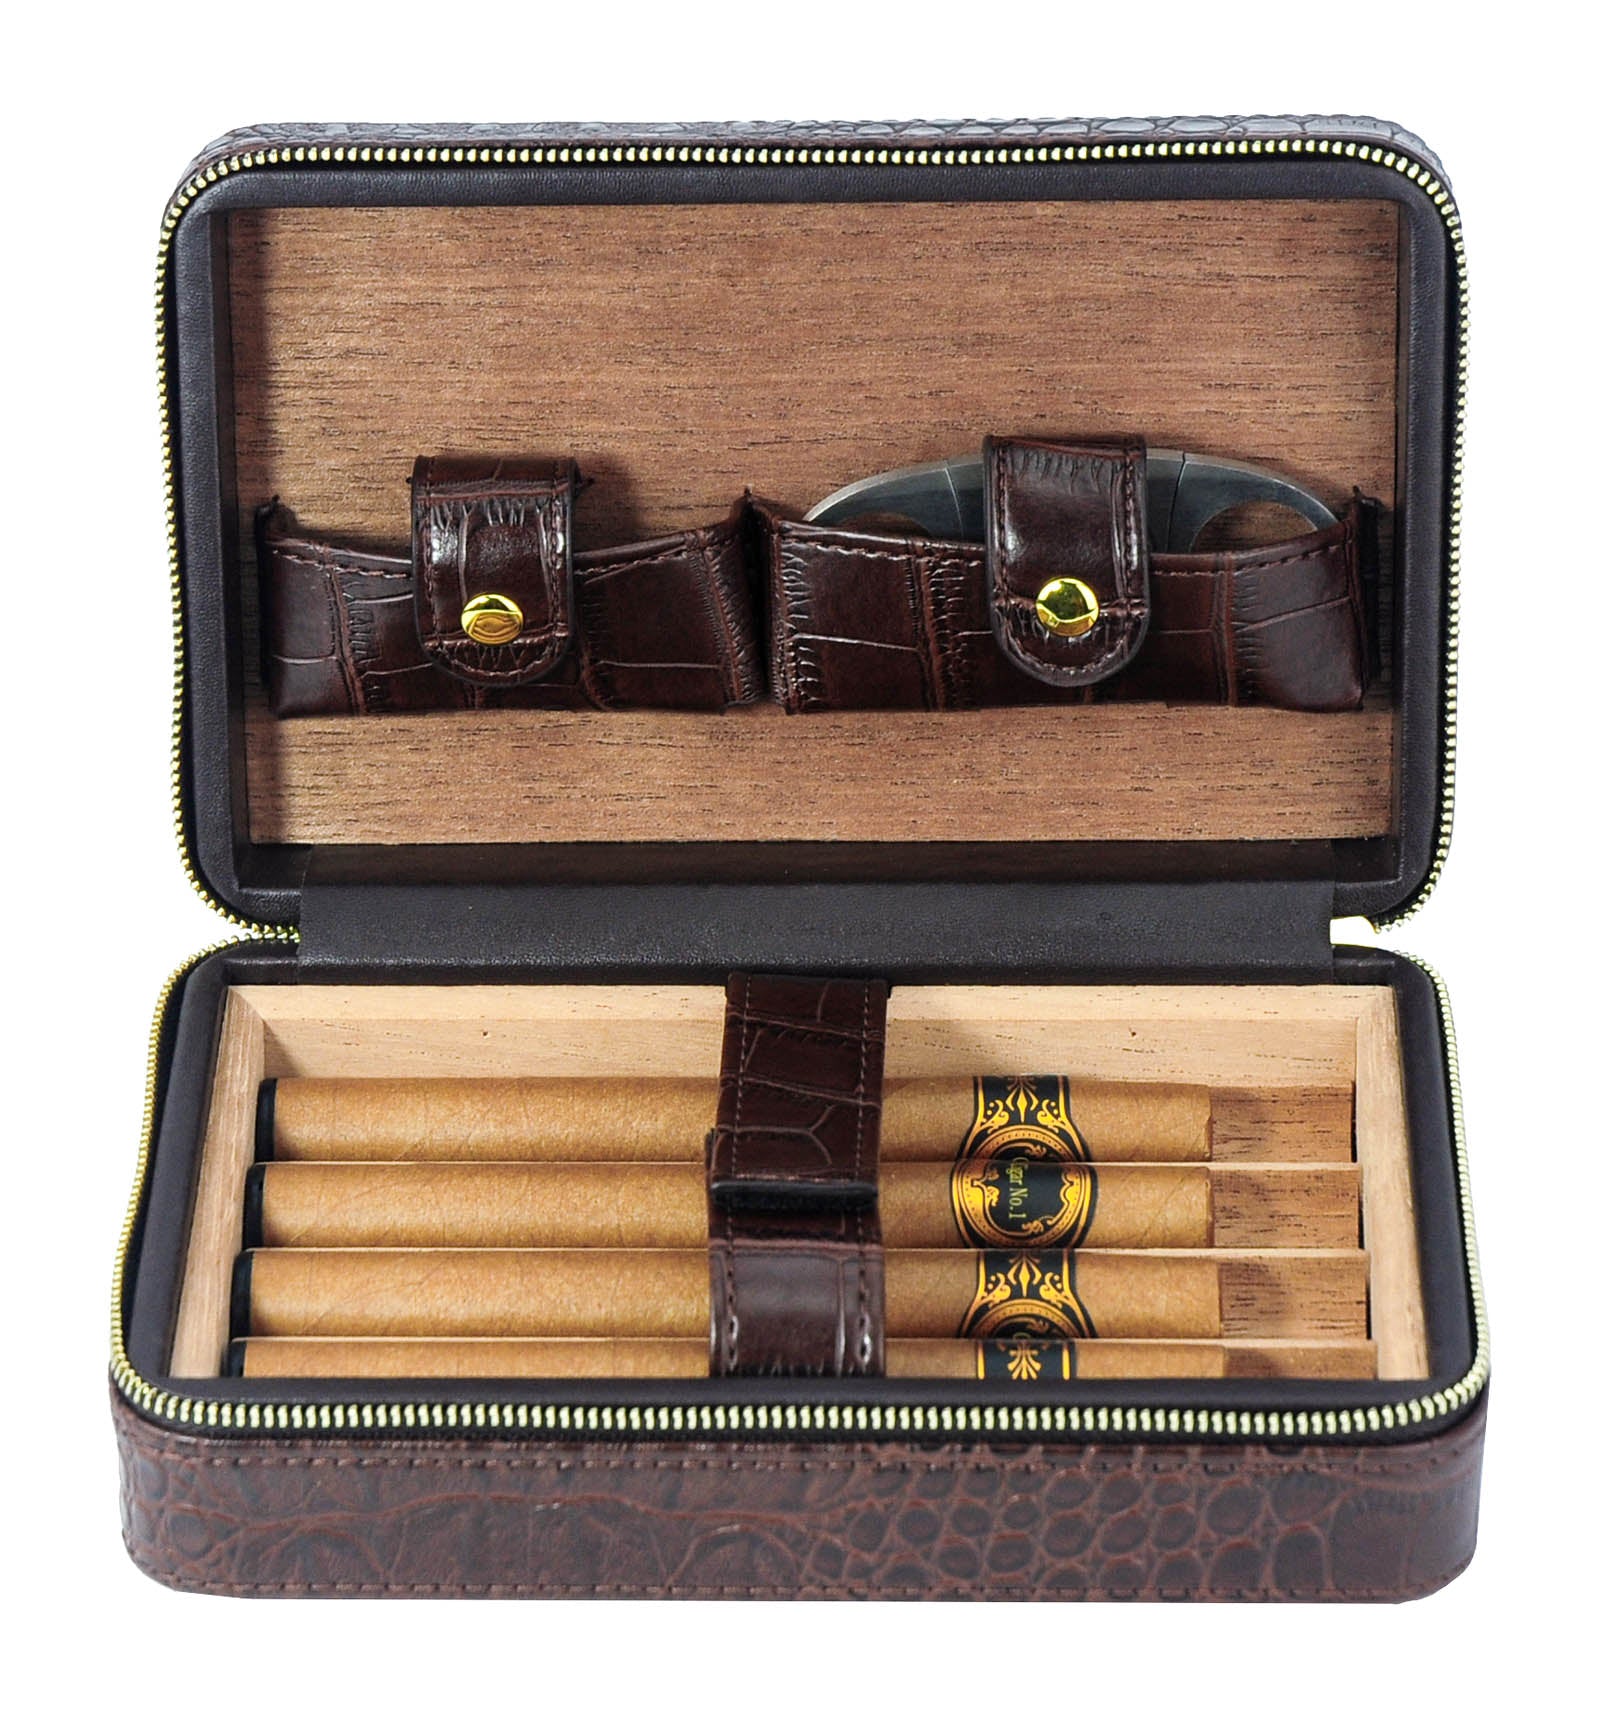 TIMELYBUYS 4 Cigar Cedar Wood Lined Portable Travel Case - Brown Crocodile PU Leather